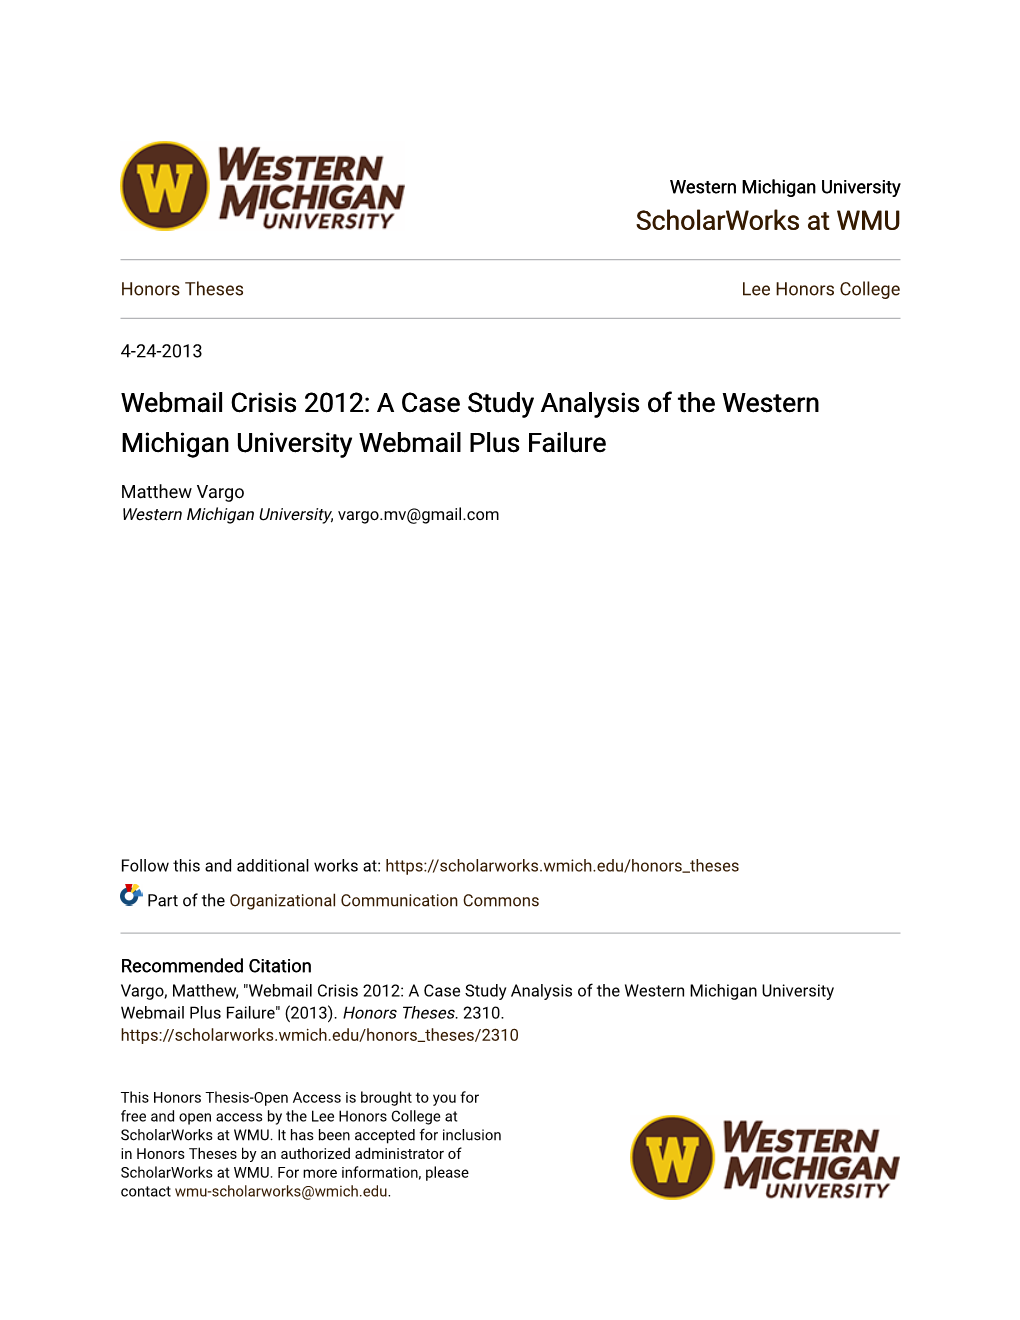 A Case Study Analysis of the Western Michigan University Webmail Plus Failure